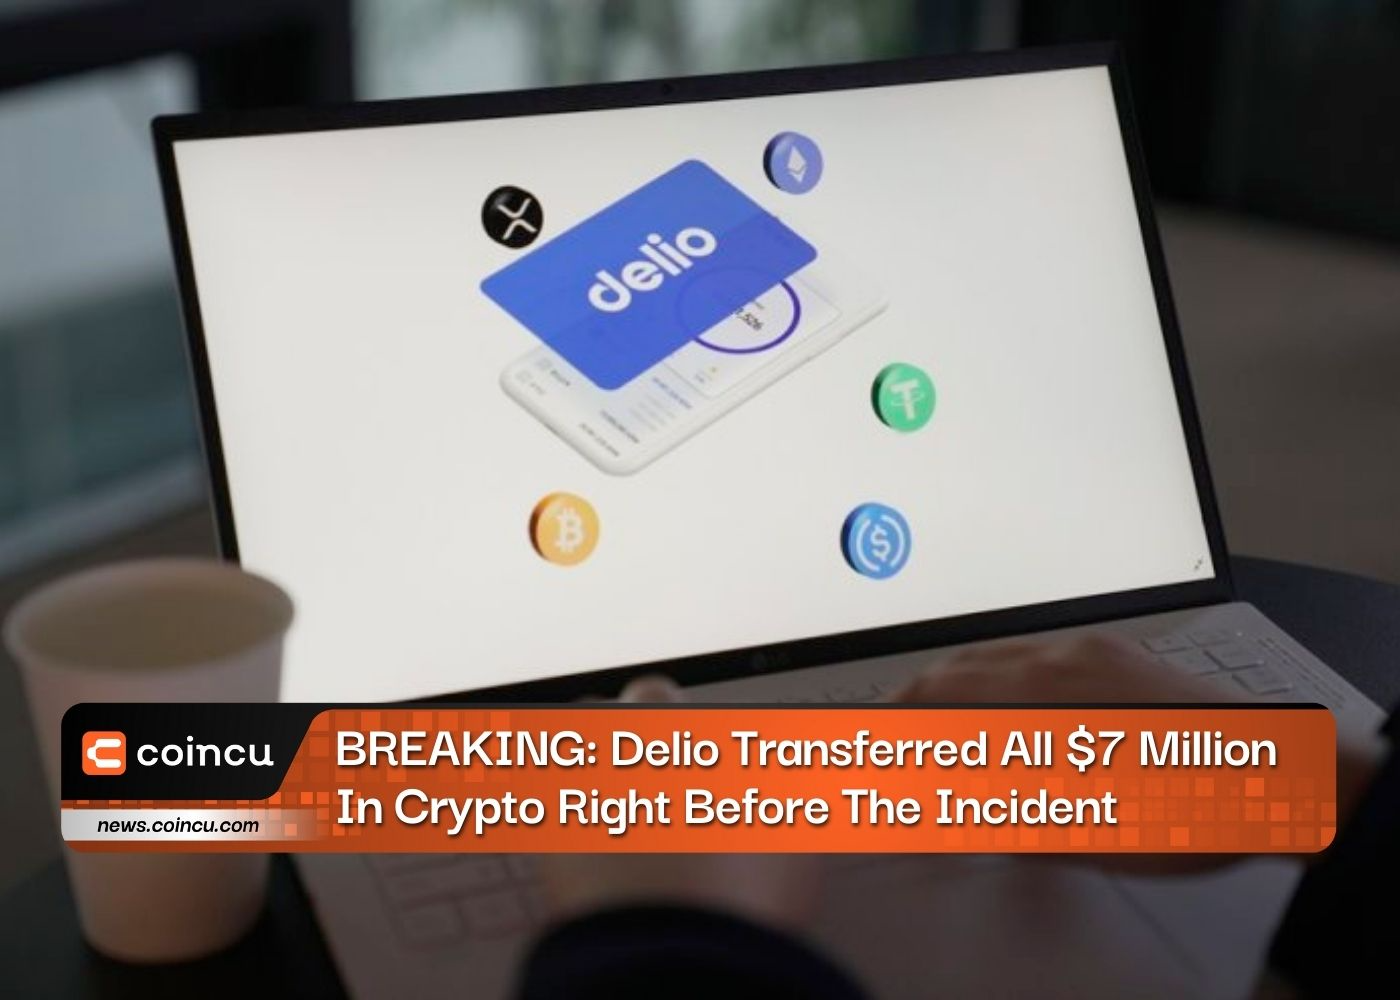 BREAKING: Delio Transferred All $7 Million In Crypto Right Before The Incident